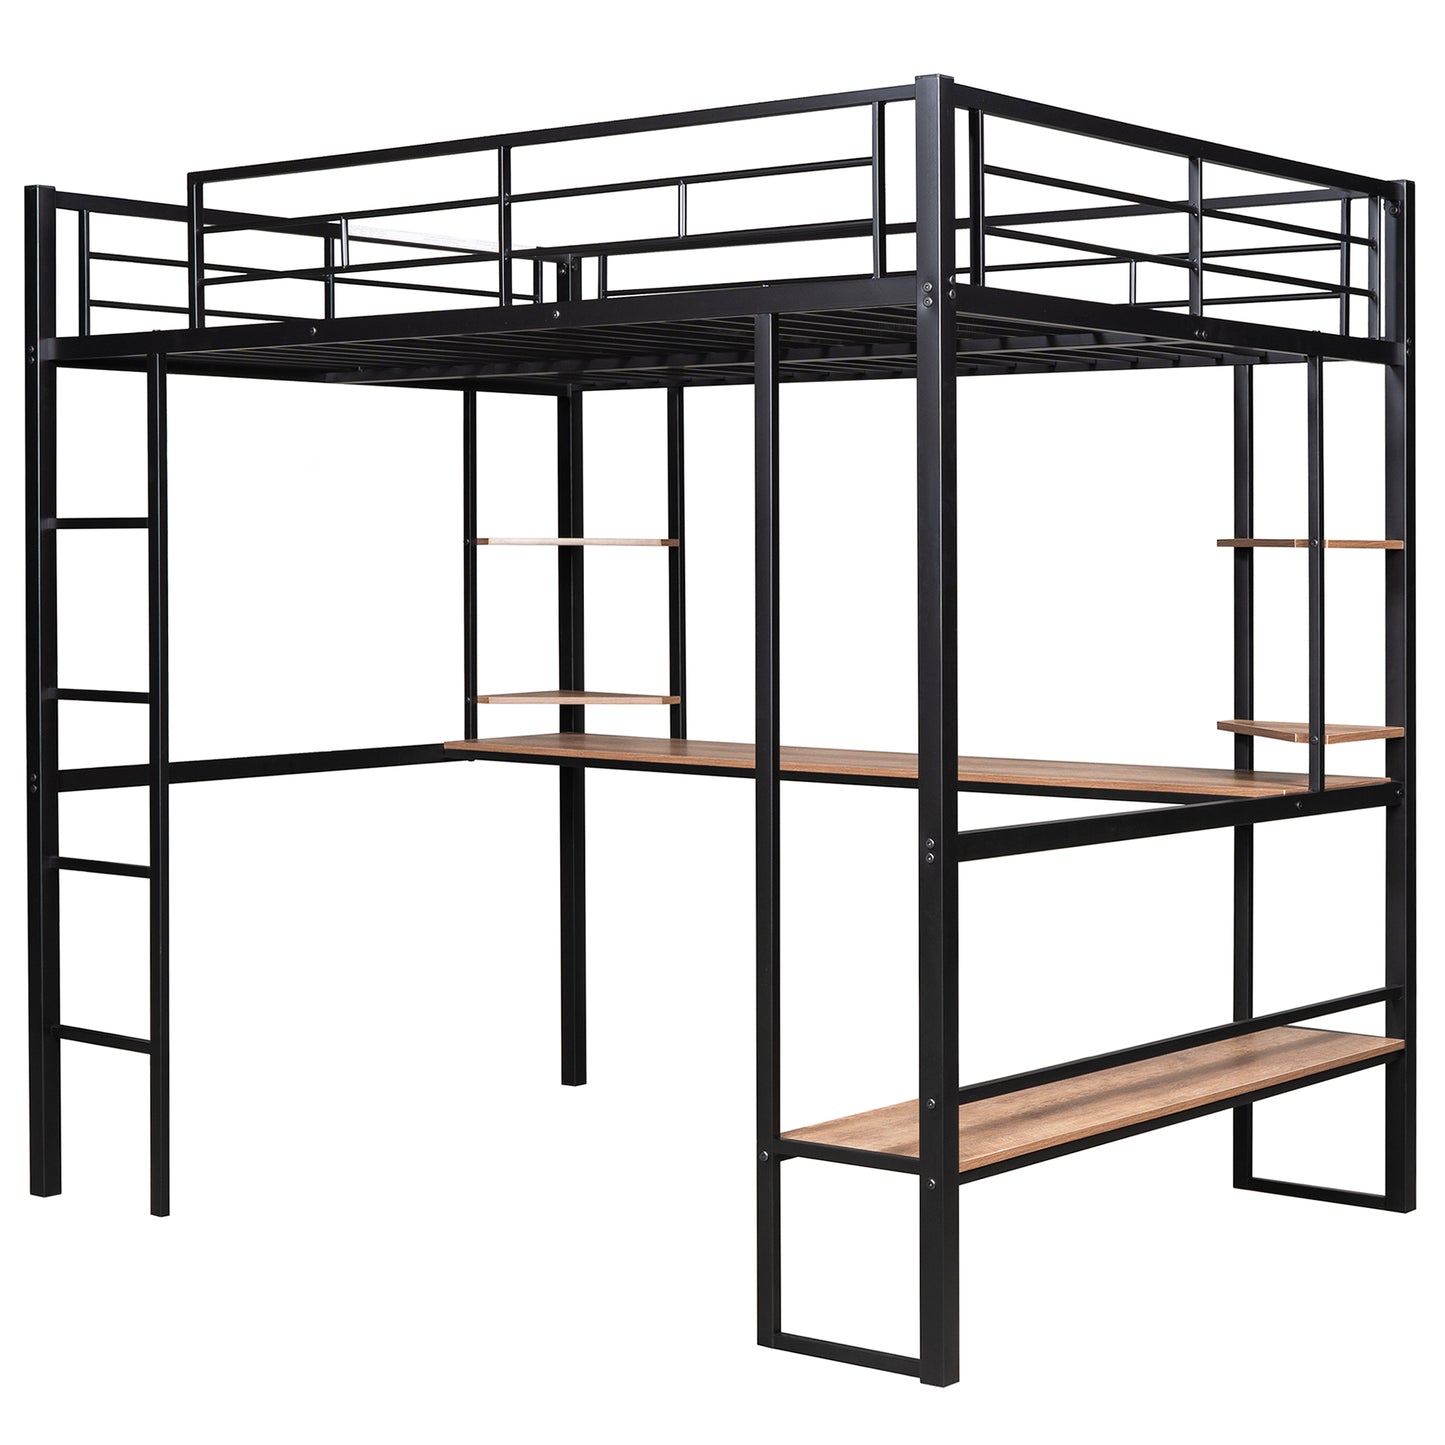 Full Loft Bed, New Upgraded Metal Bunk Bed with Long Desk & Shelves, Full Size Bed Frame No Box Spring Needed, Loft Bed with Vertical Ladder, Full Bunk Bed Kids Bedroom Furniture, Black